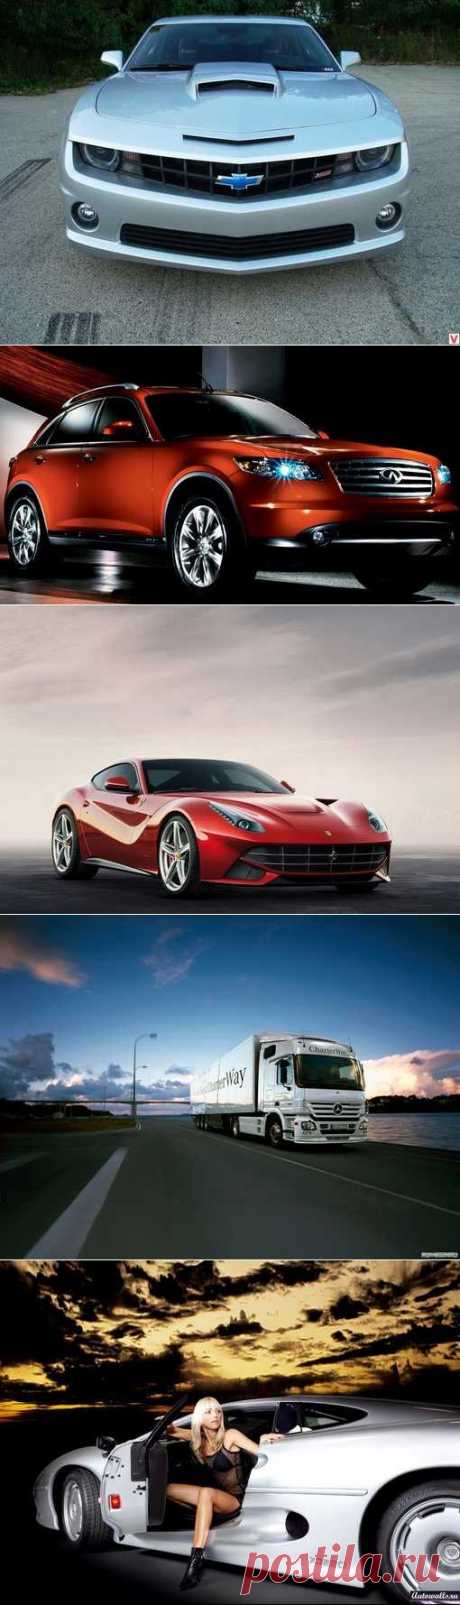 Lotus, Daimler, Lotus, Brilliance, Saturn. (1/1) - Авто форум - Auto